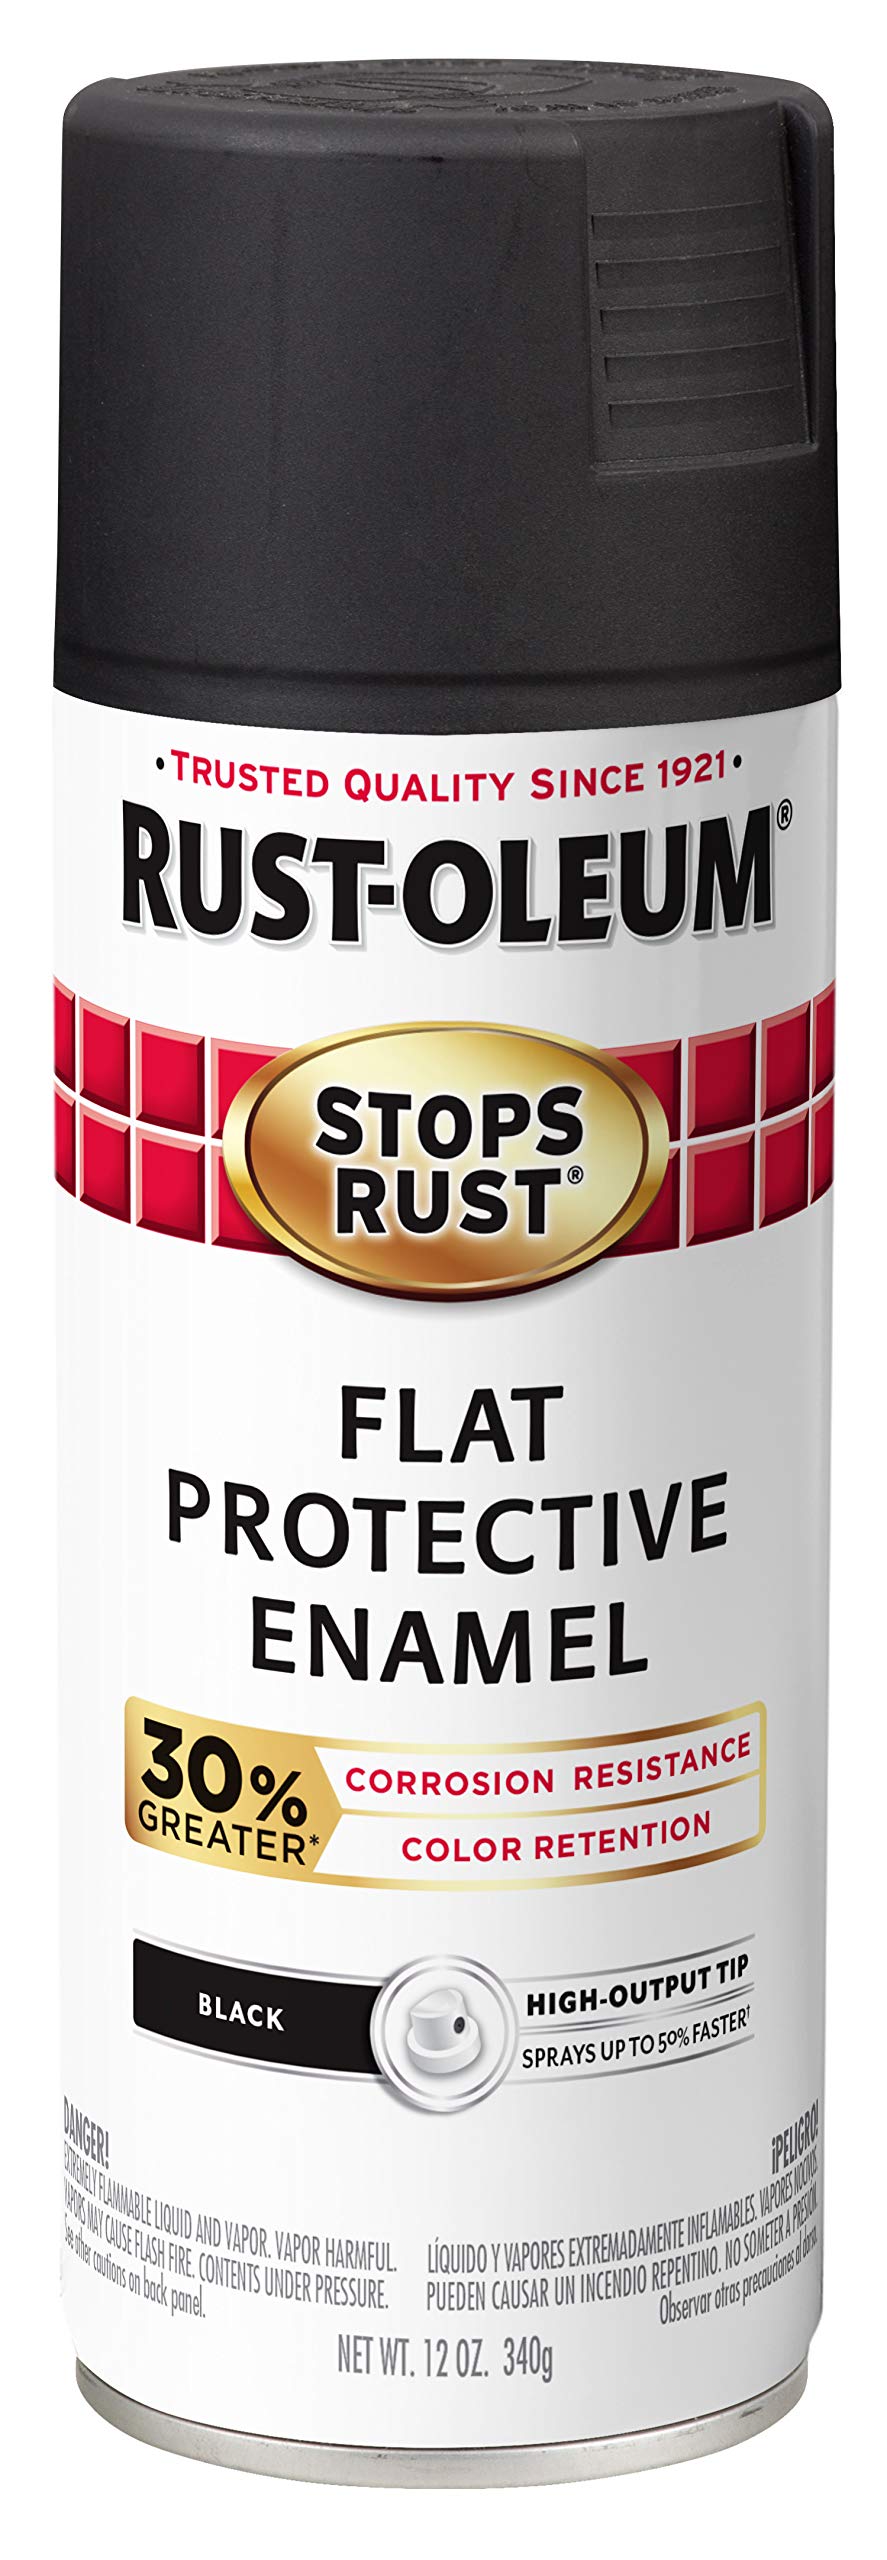 Rust-Oleum 338948 Stops Rust アドバンスト スプレー ペイント、フラット ブラック、12 オンス